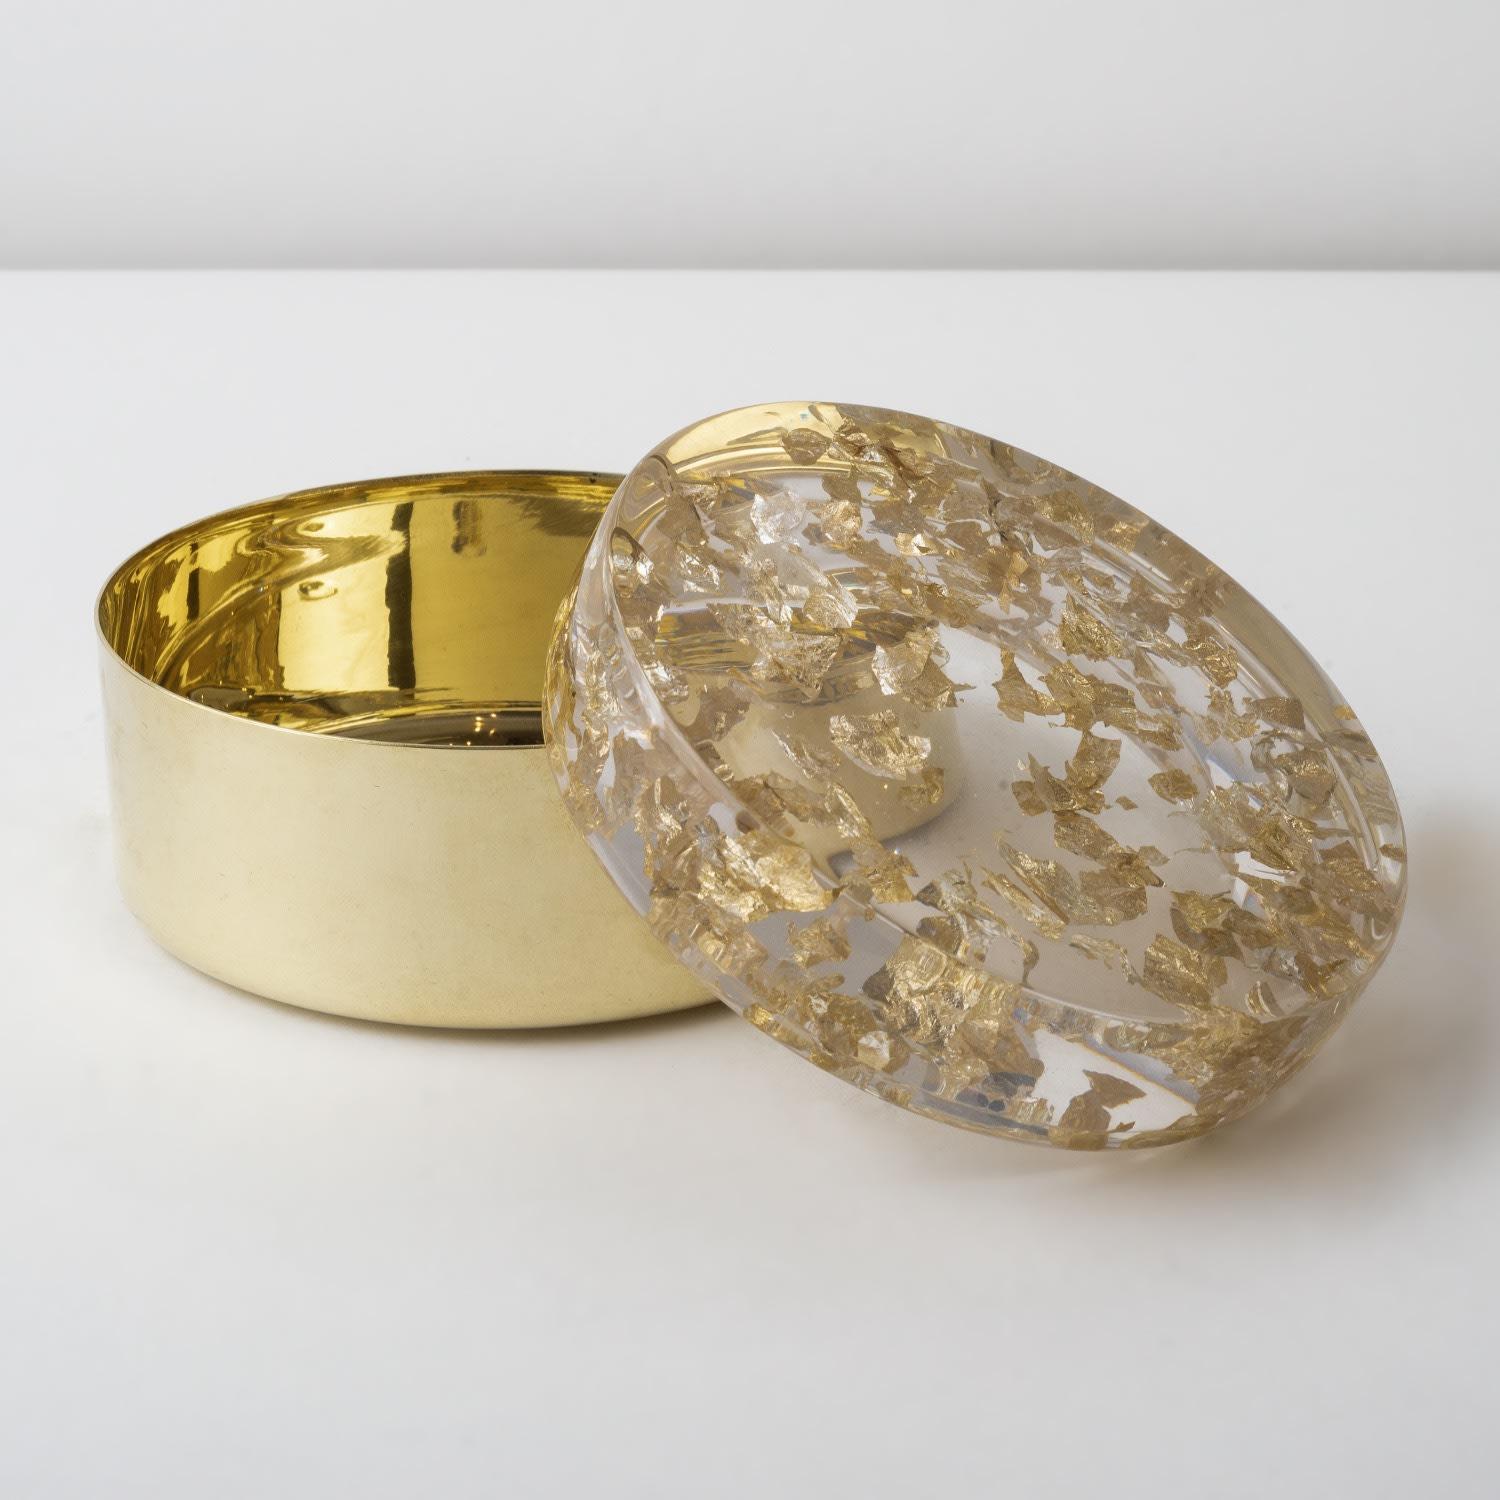 Contemporary Dorado Brass & Gold Leaf In Resin Small Decorative Box